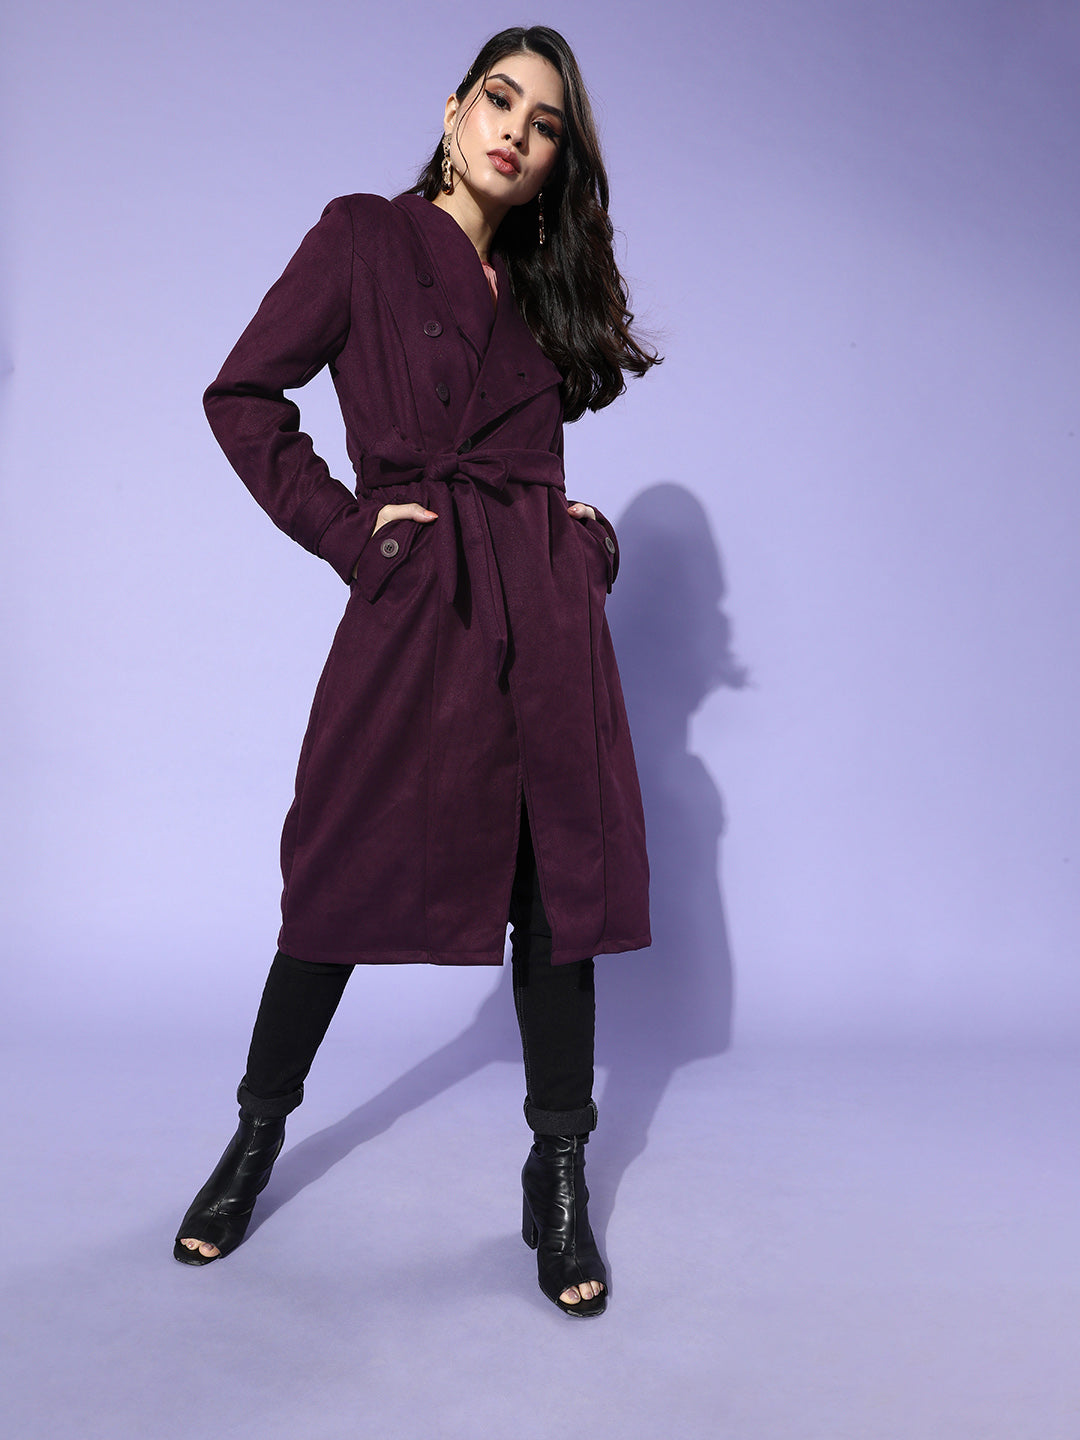 Athena Purple coat with waist Tie-up belt and pocket details - Athena Lifestyle